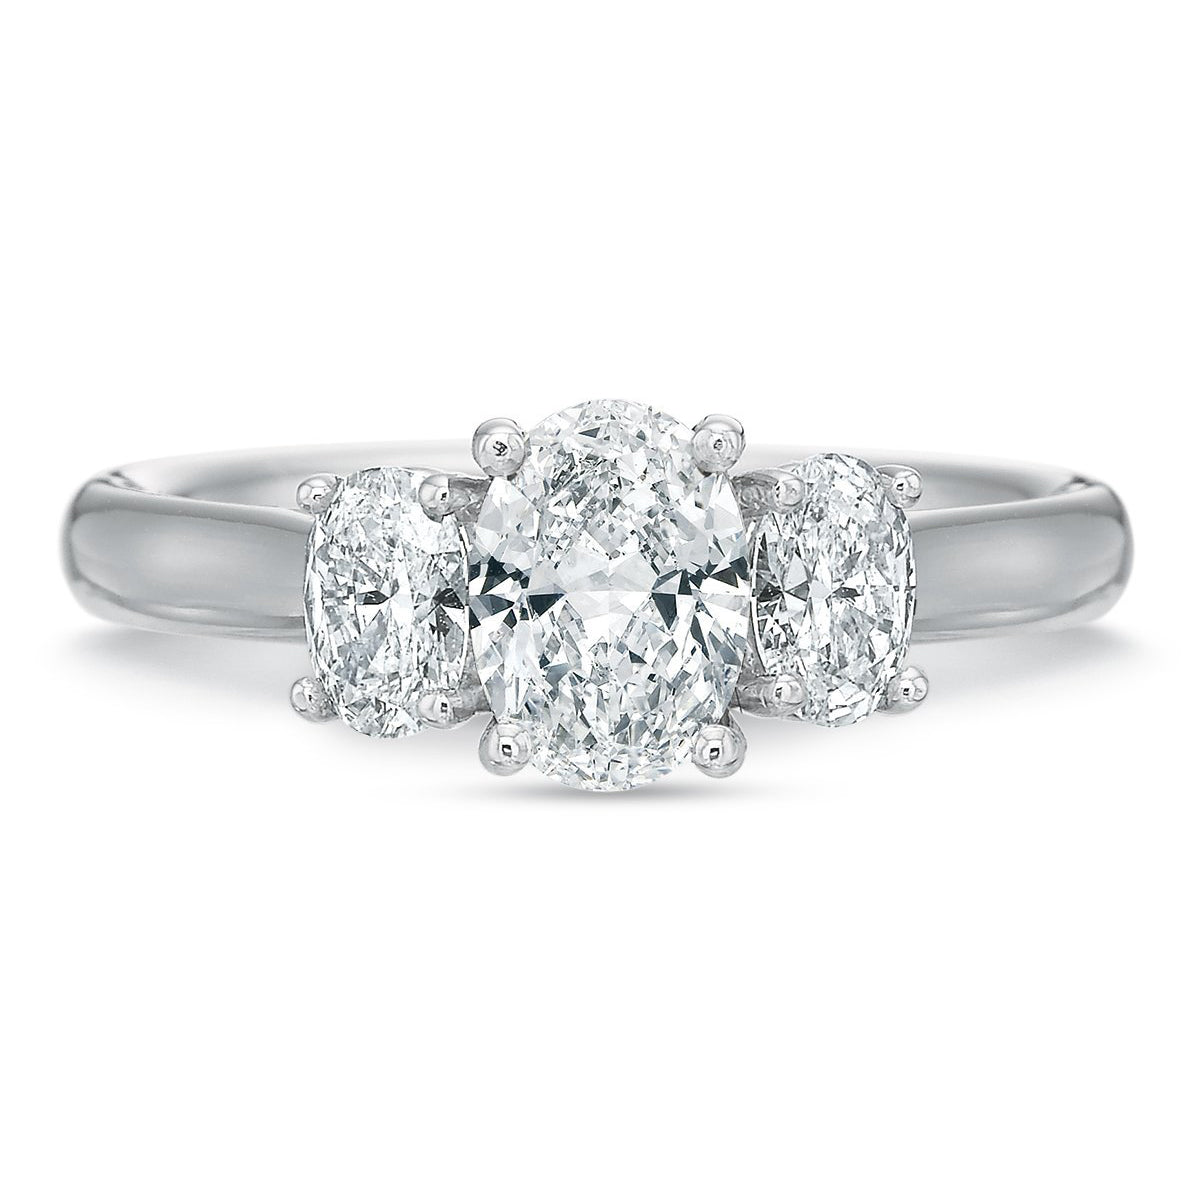 Korman Signature 18kt 3-stone Oval Cut Diamond Engagement Ring